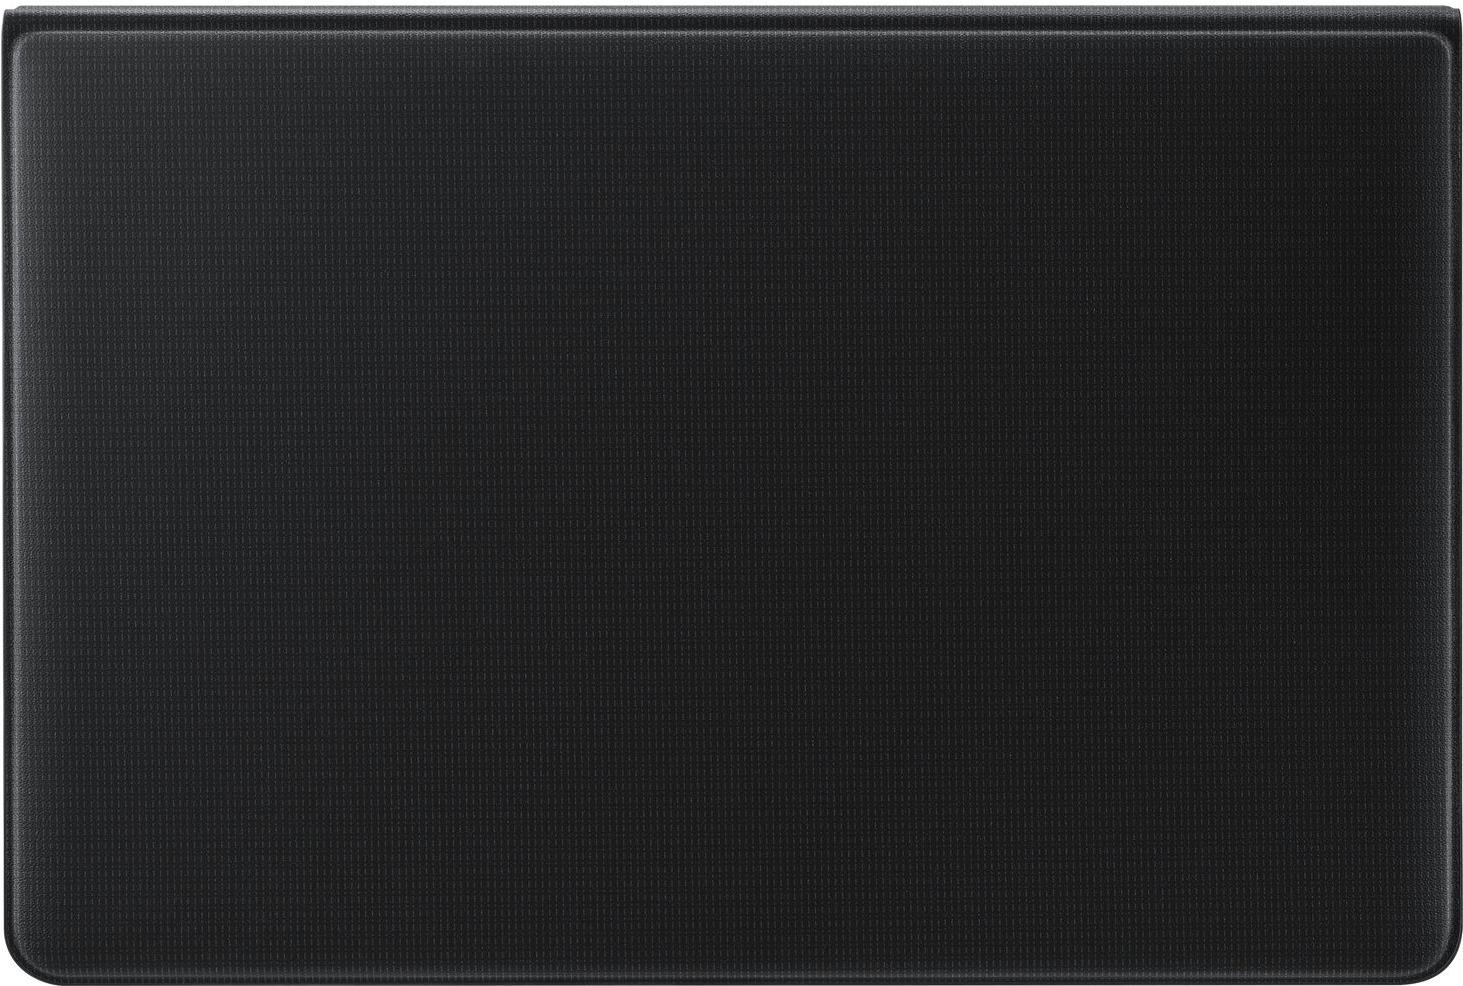 Keyboard Cover Galaxy Tab S4 black (EJ-FT830BBEGDE)